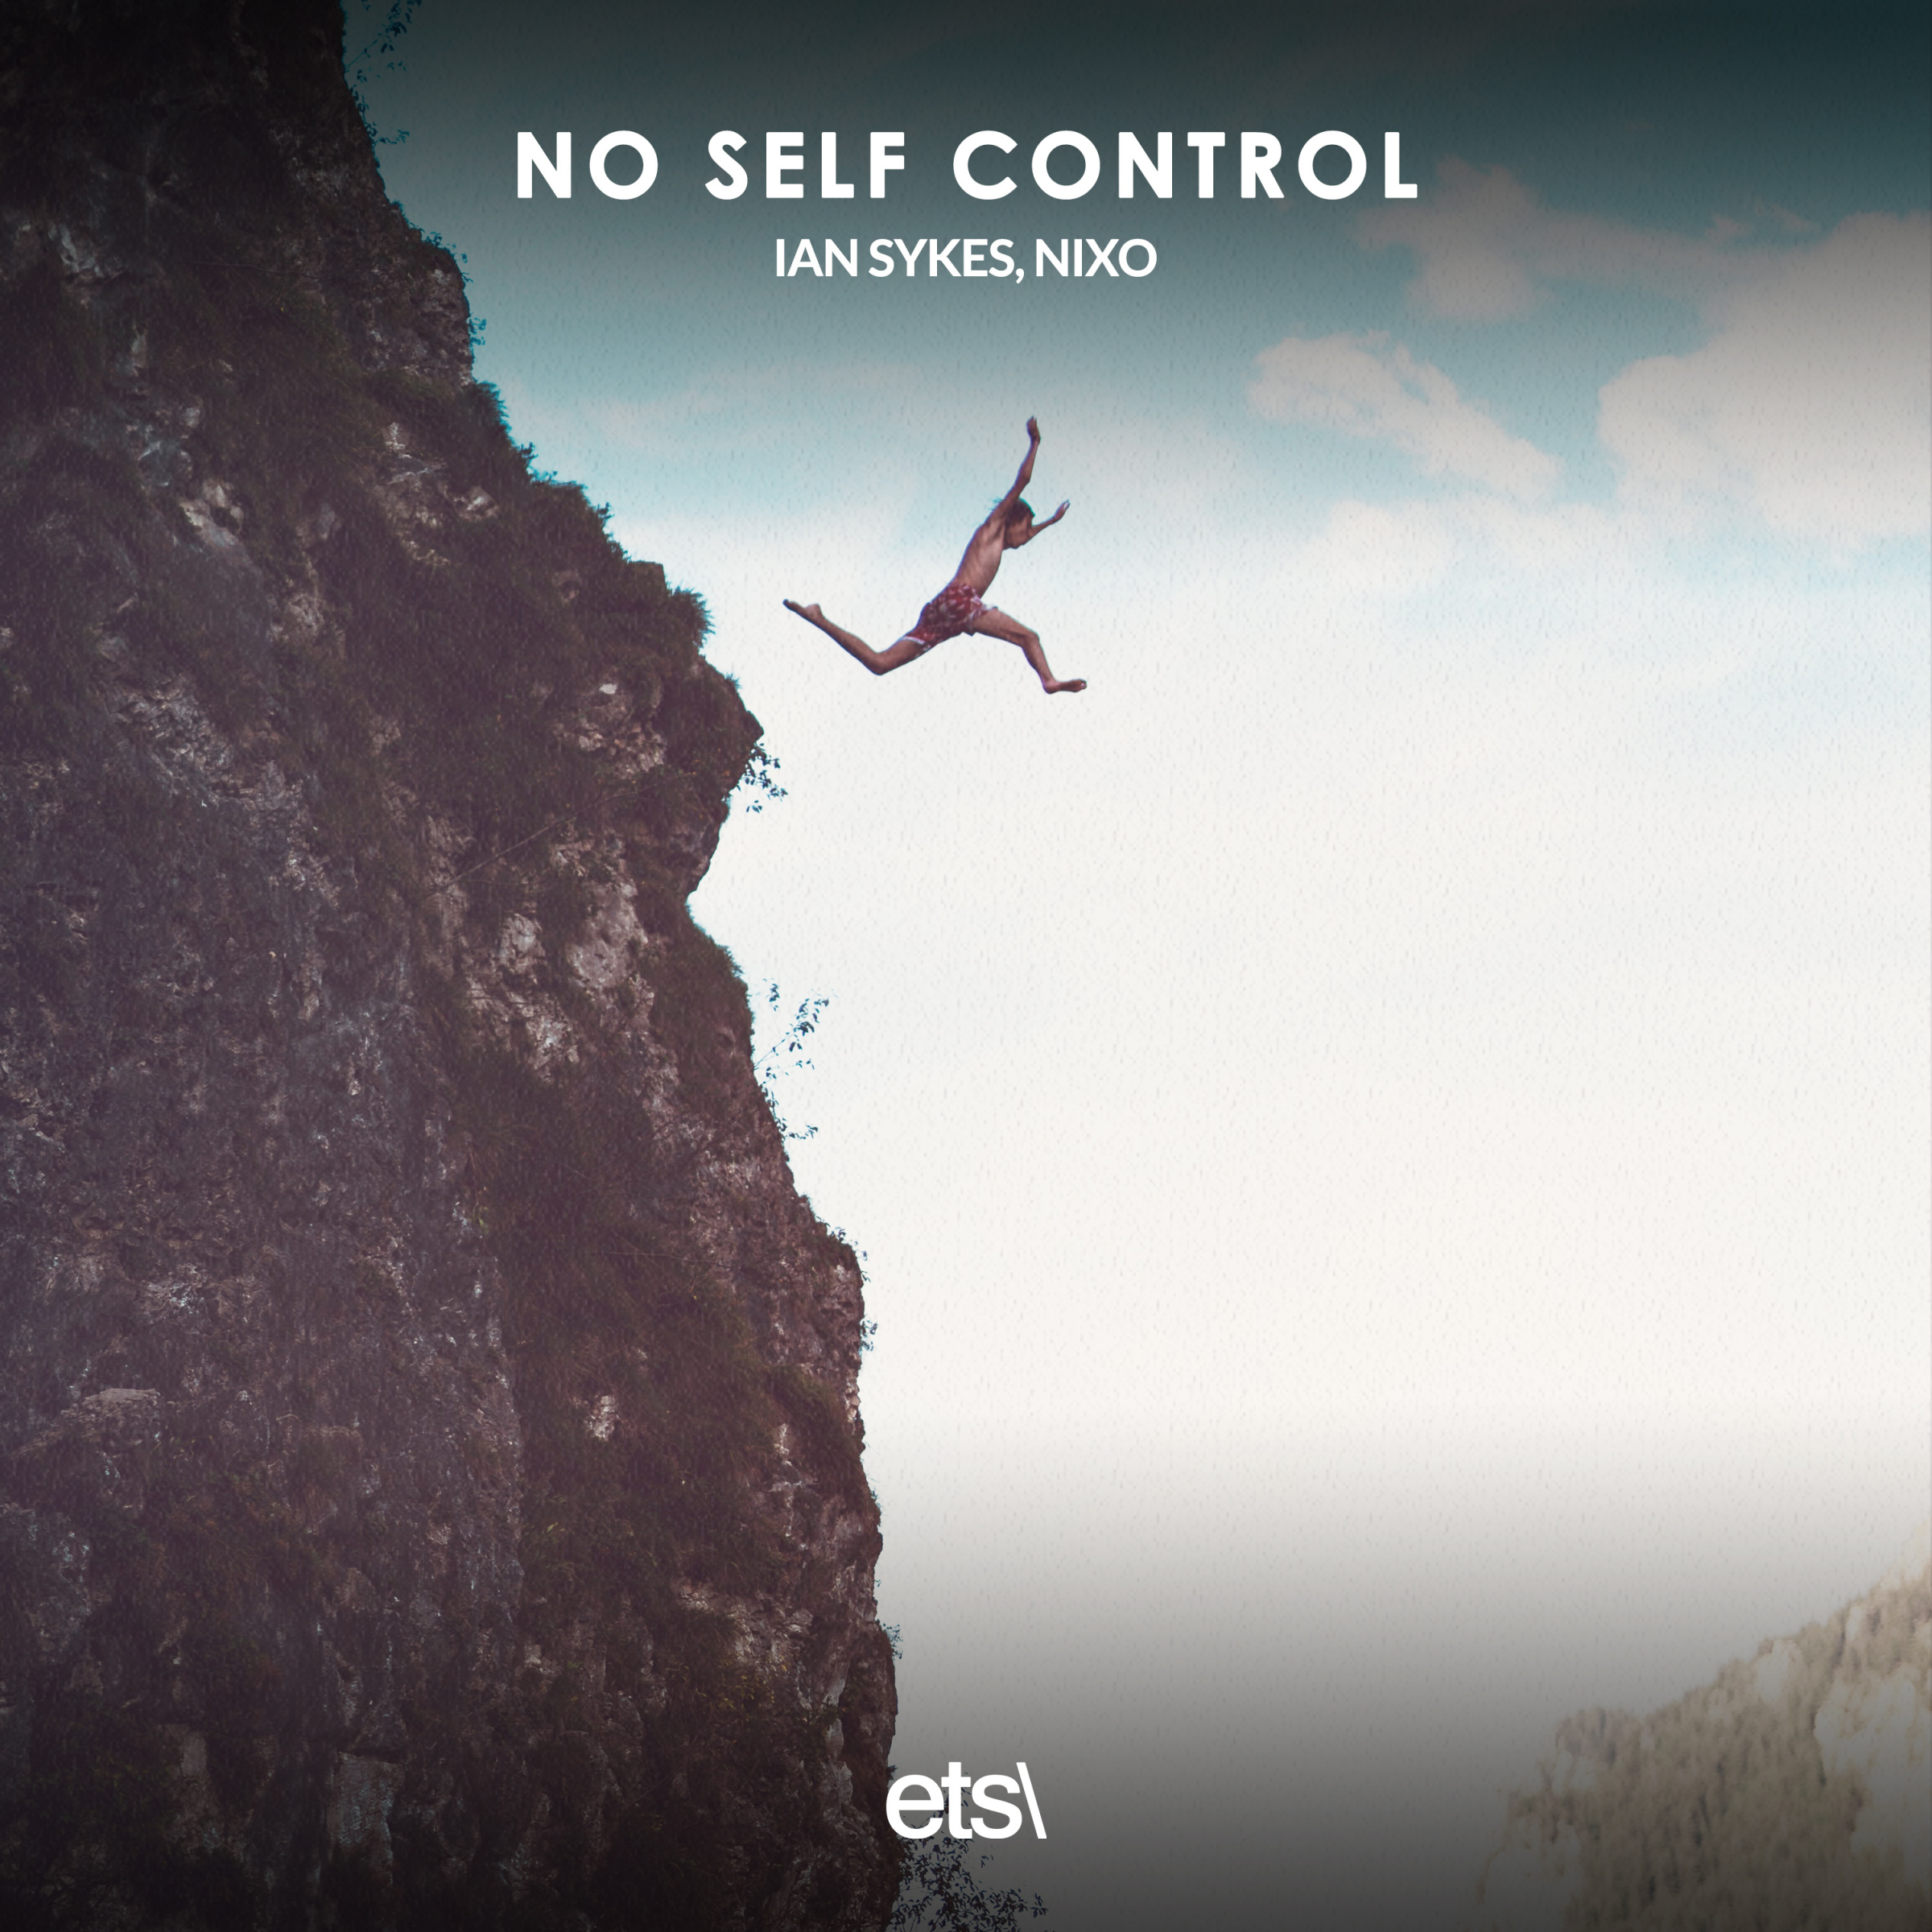 Селф контрол. Self Control Extended Mix фото. Self Control on. Self Control песня. Self control mp3